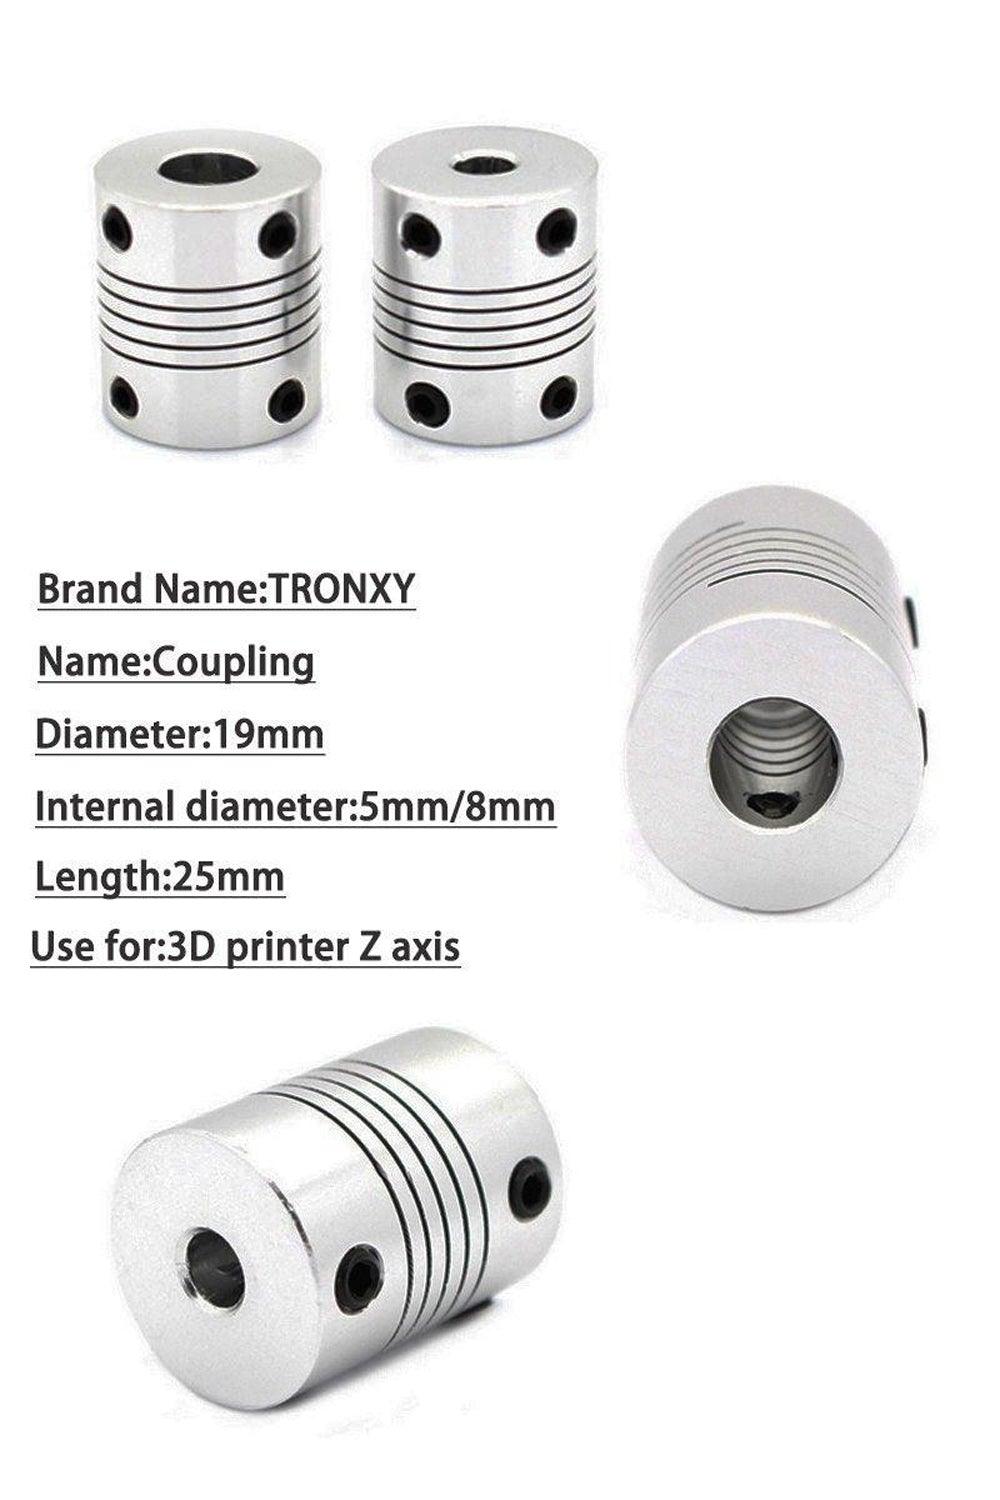 Tronxy Flexible Coupling Coupler Shaft For 3D Printer Stepper Motor Z Axis - Tronxy 3D Printers Official Store